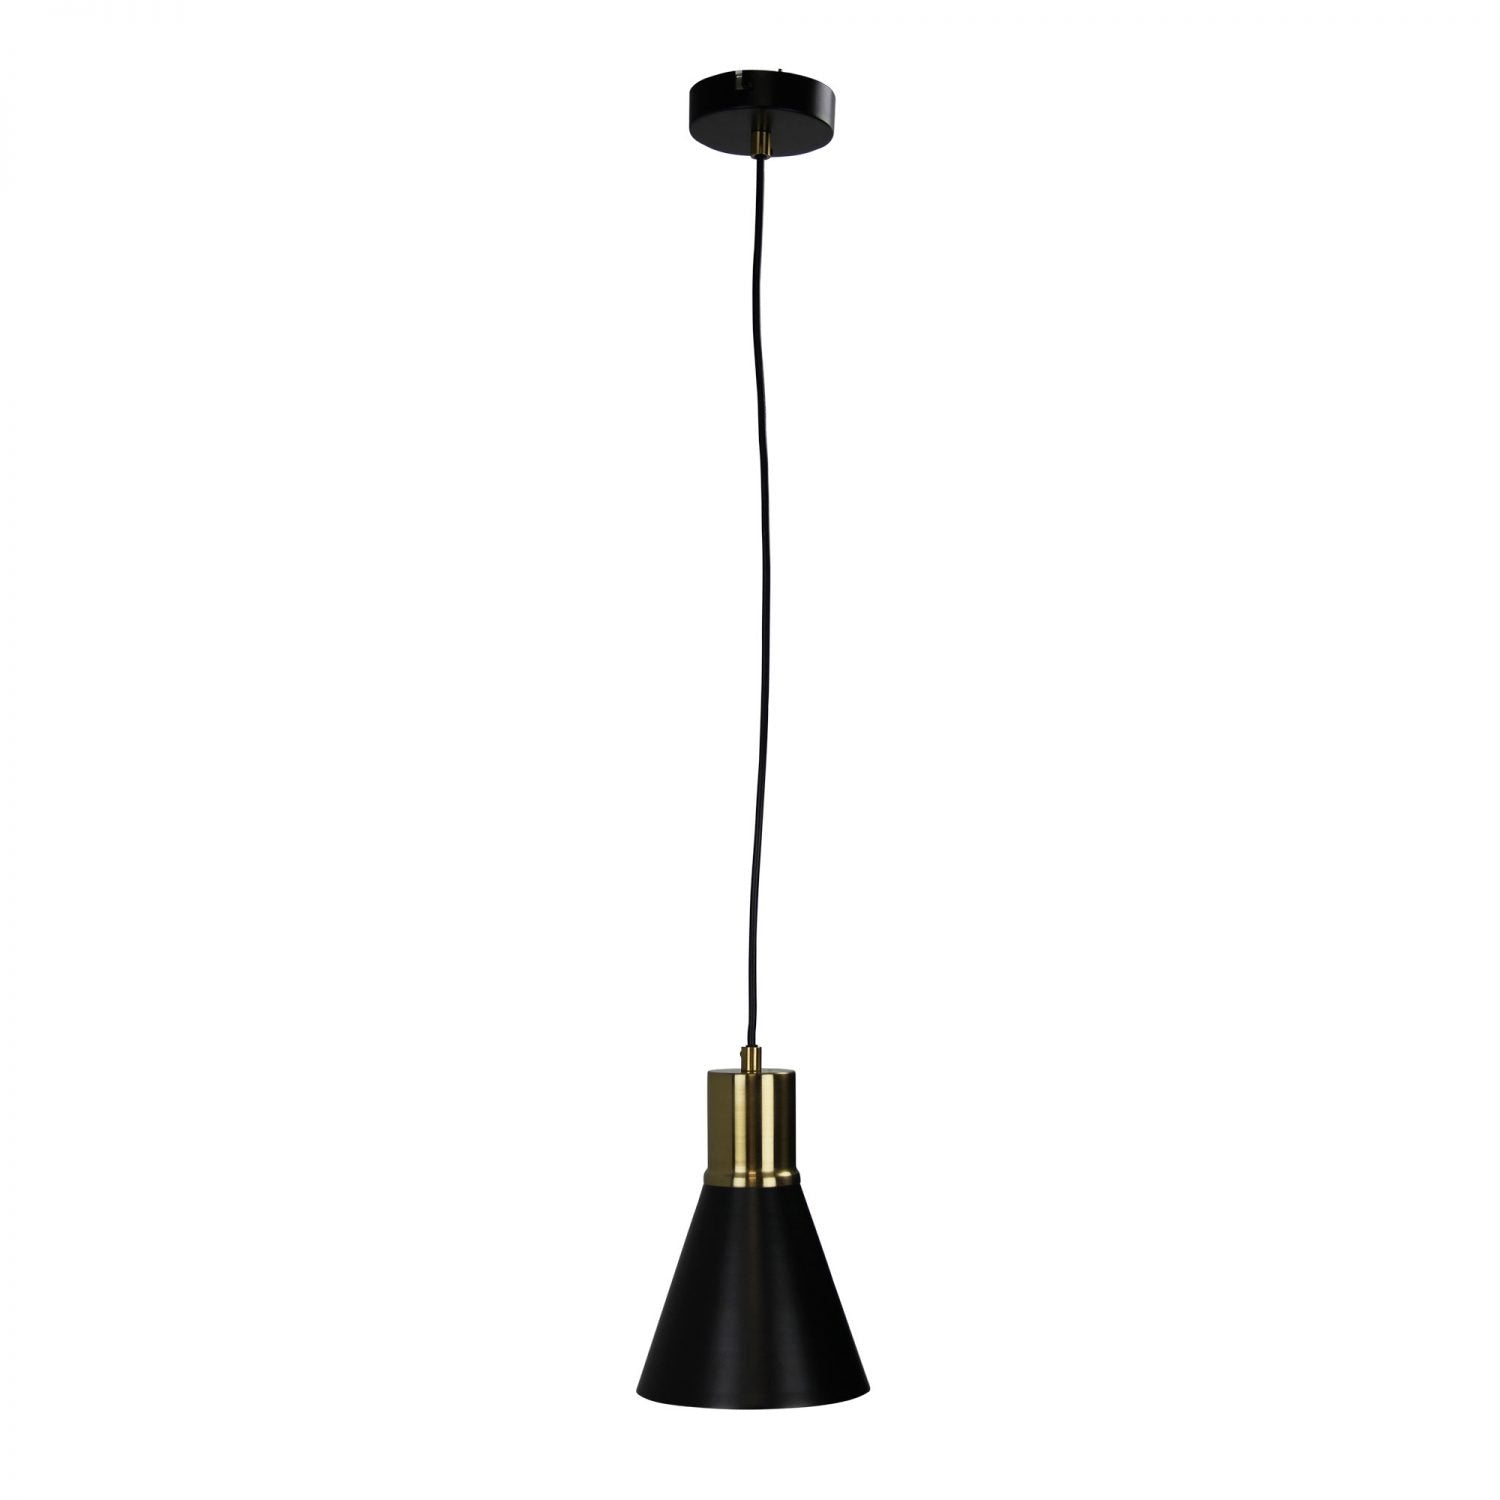 Buy Pendant lights australia - Como 1 Light Pendant Antique Brass & Black - OL67511AB